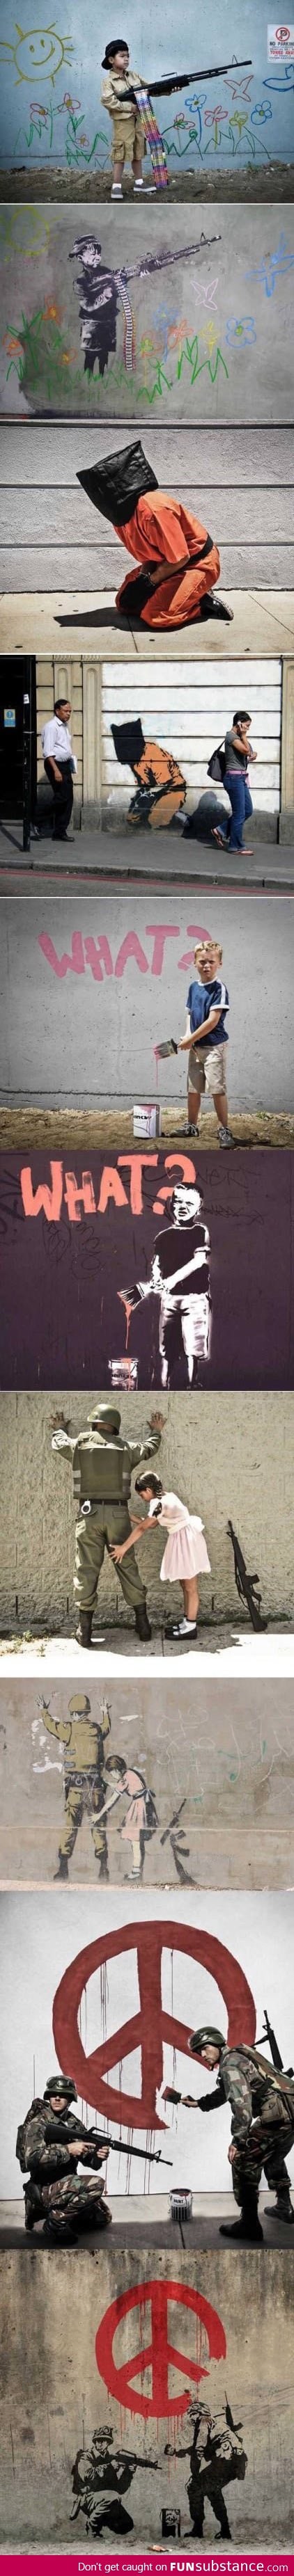 Banksy Art Recreated as Reality